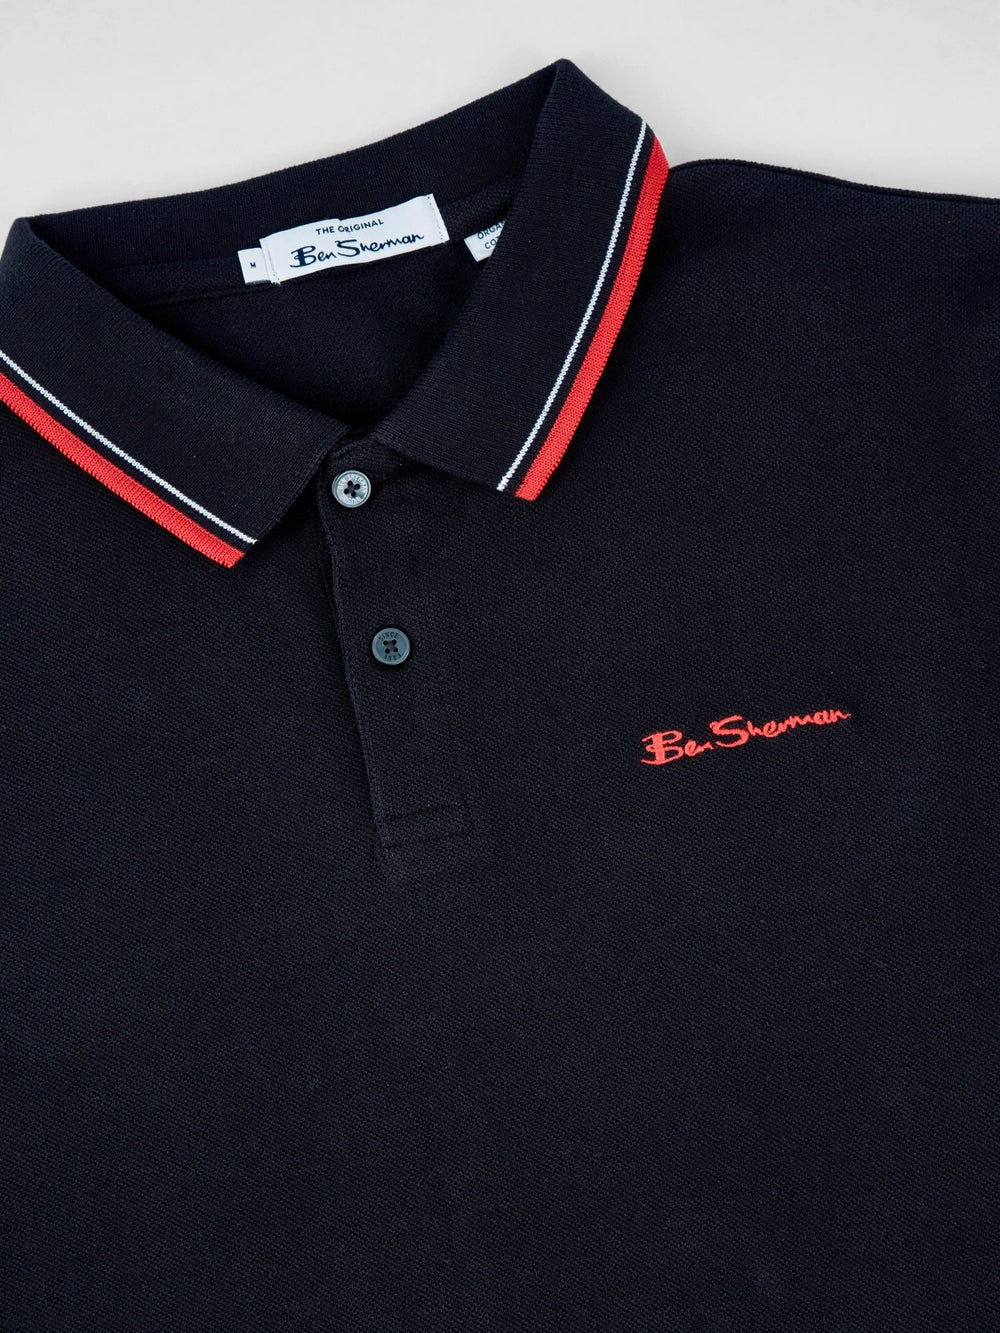 Signature Organic Cotton Polo - Black  Polo shirt, Black polo shirt, White  polo shirt